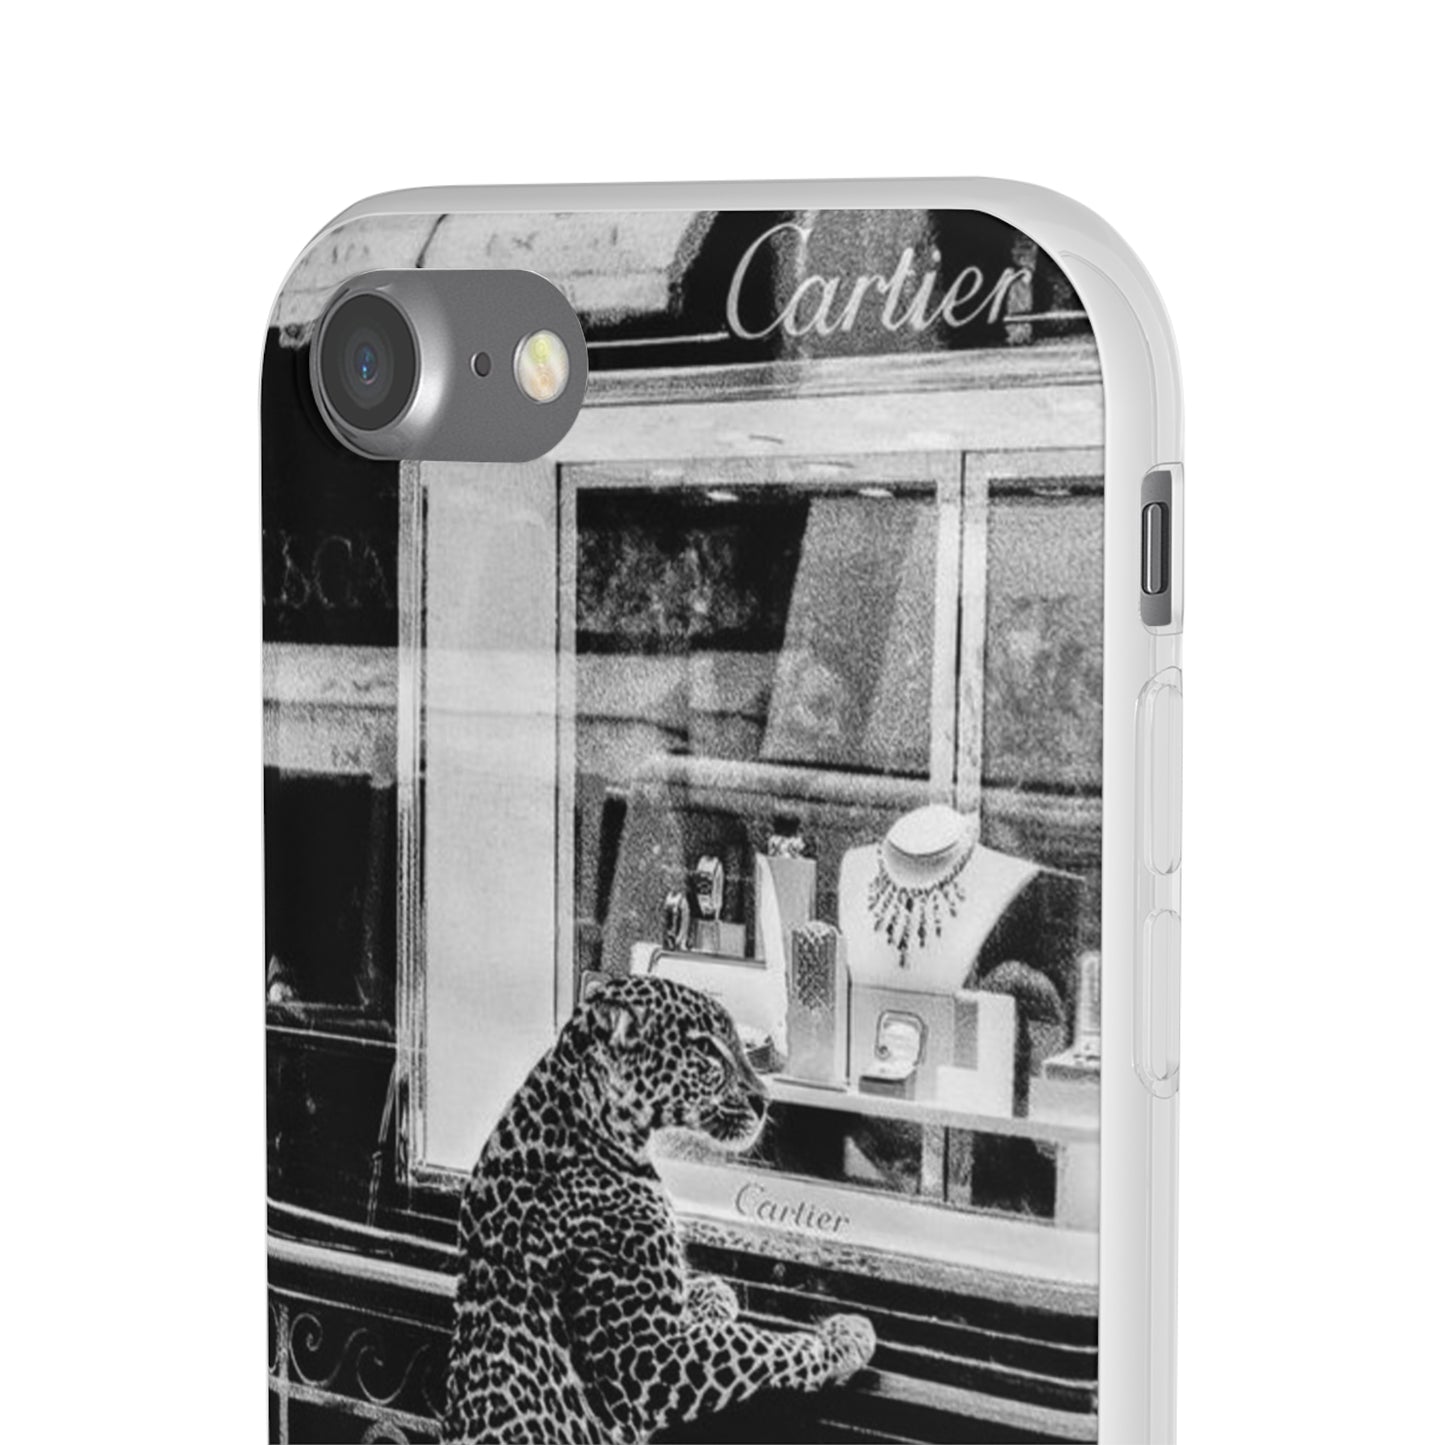 Cartier Store Cases